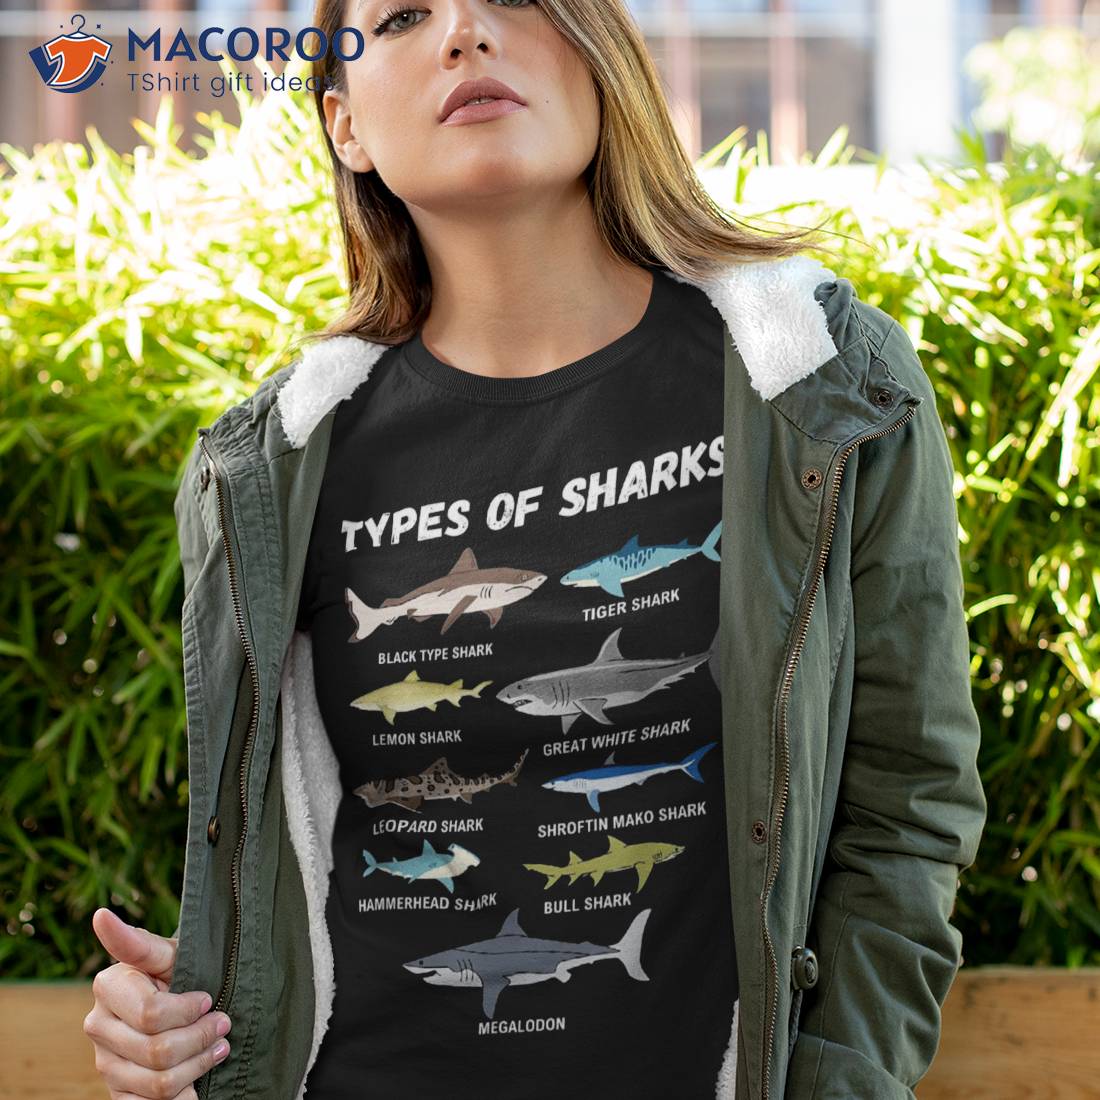 https://images.macoroo.com/wp-content/uploads/2023/05/type-of-shark-sea-boat-fishing-trip-kids-shirt-tshirt-4.jpg